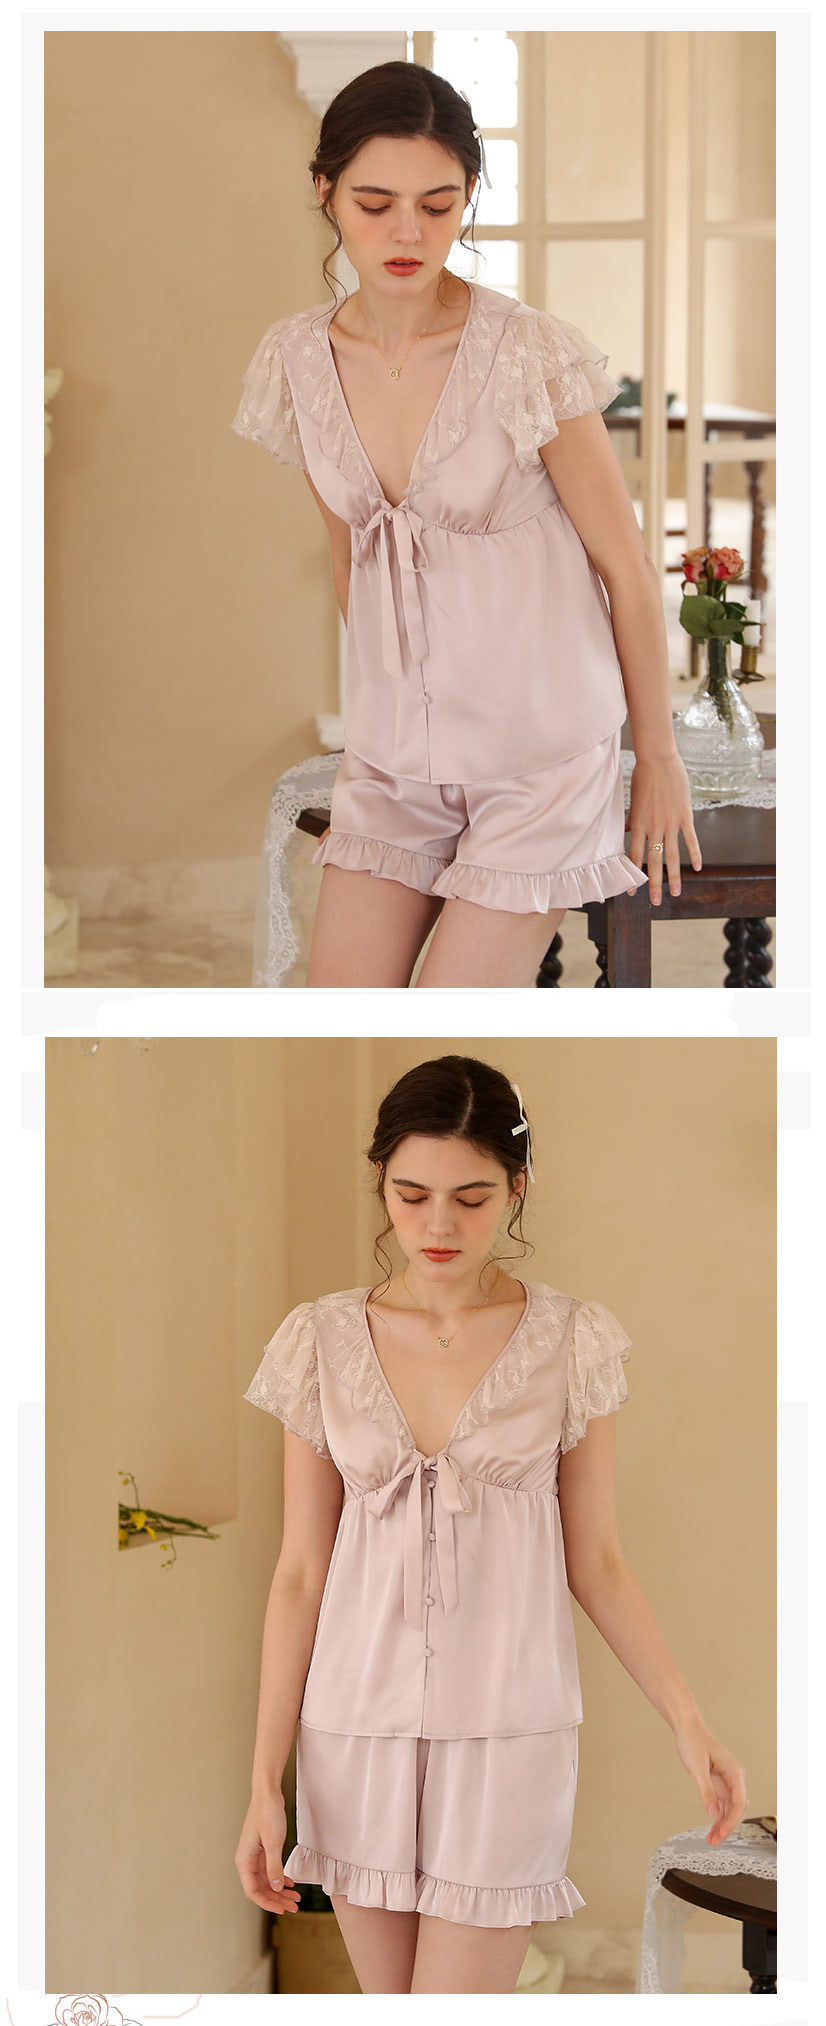 Lace-Satin-Sleepwear-Home-Clothes-Loungewear-Pajama-with-Shorts13.jpg